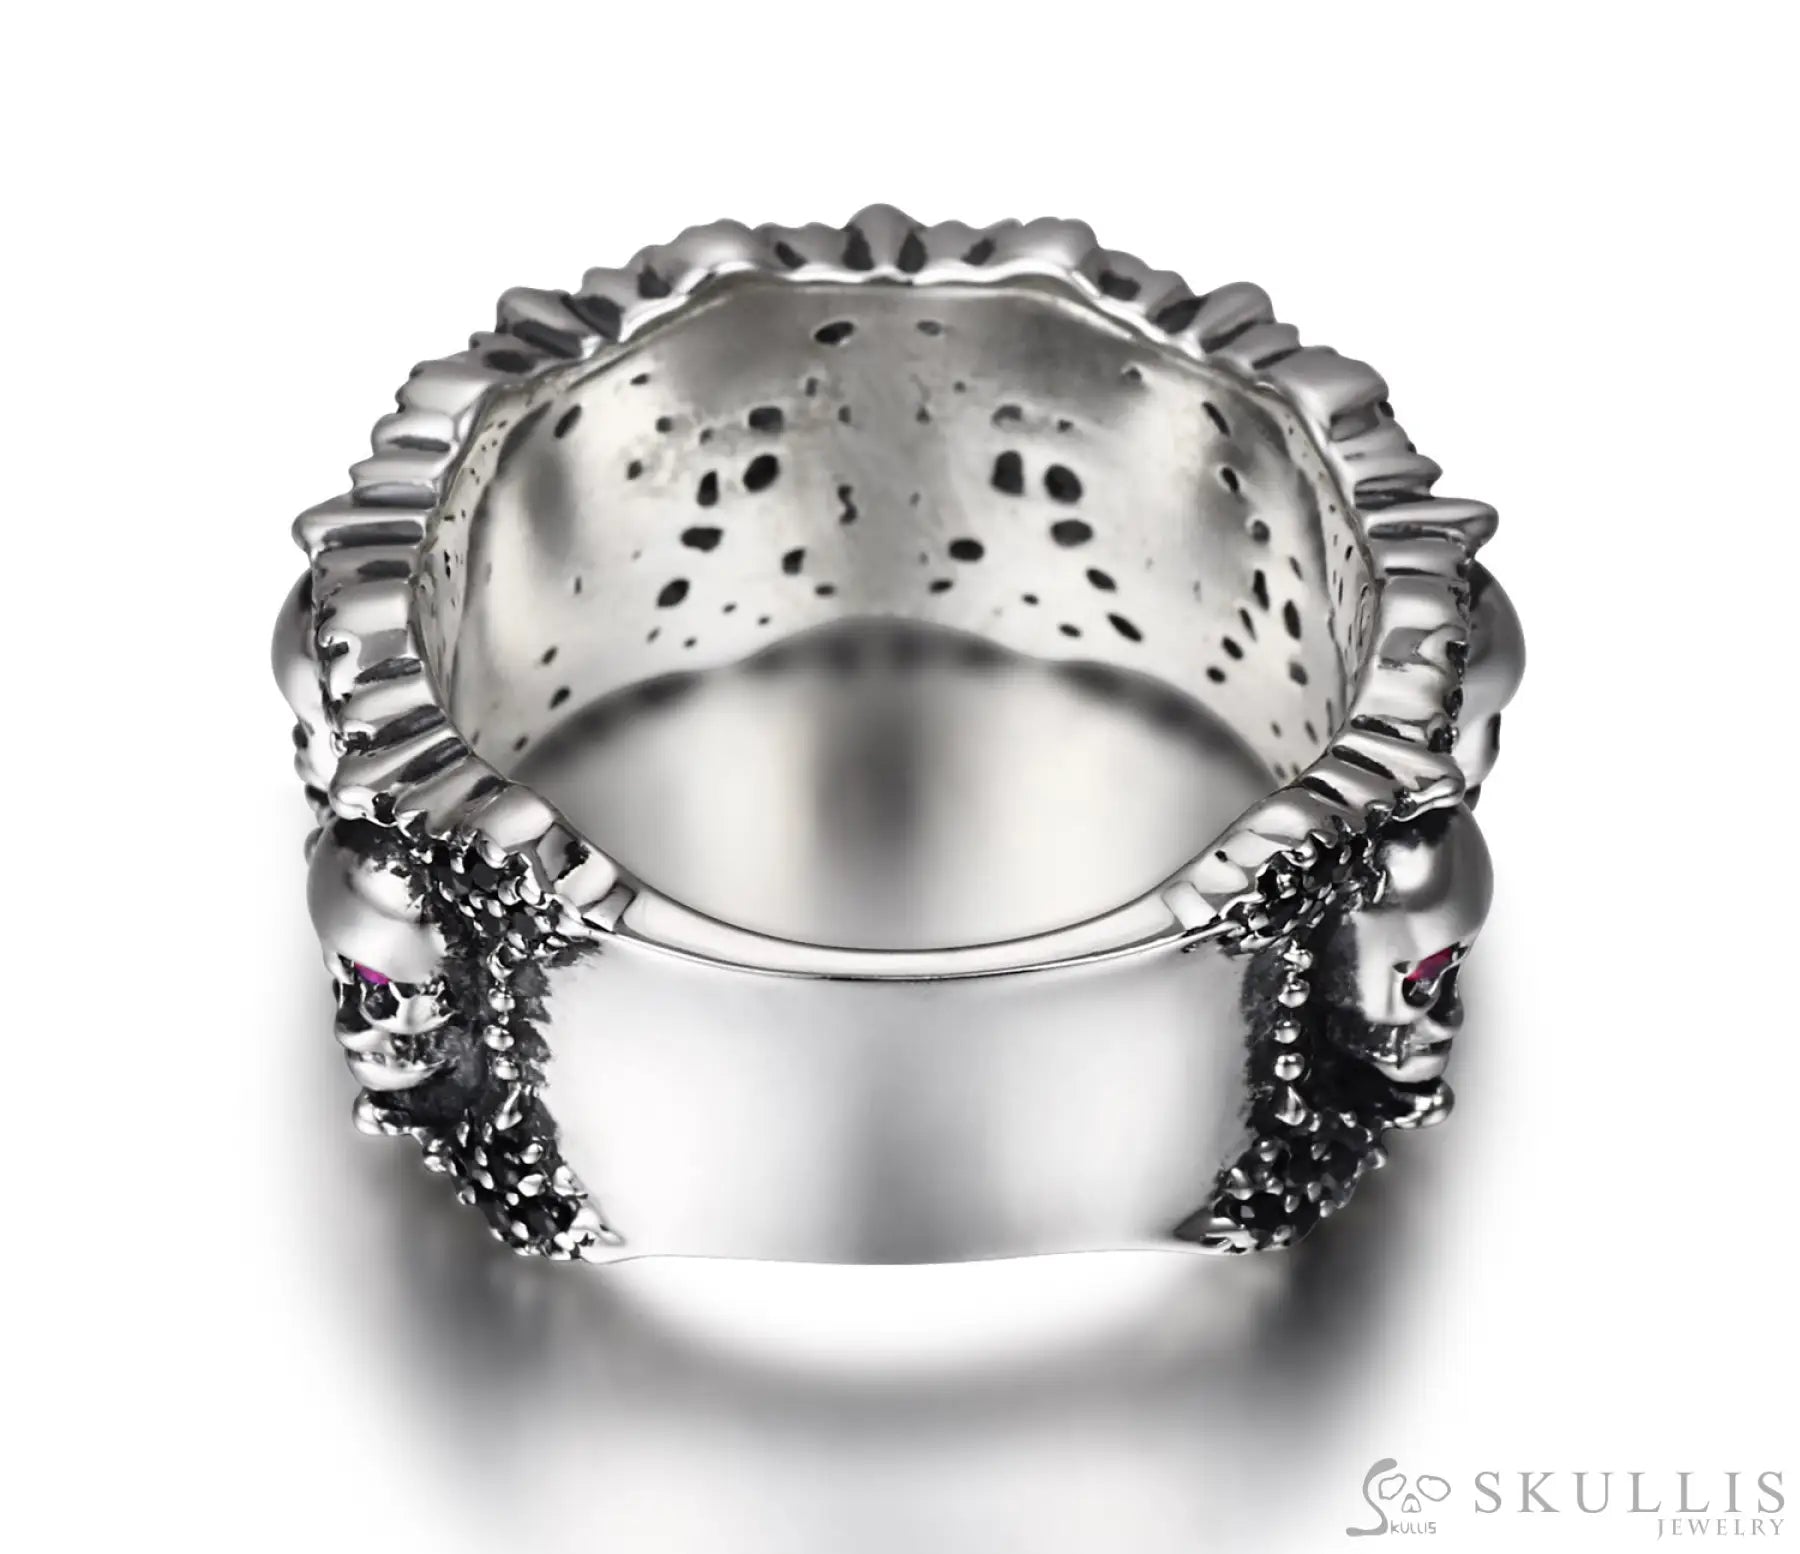 Gem Skull Eyes Of Five Elements Ring Carved Skull With Ruby Eyes In 925 Sterling Silver Skull Rings